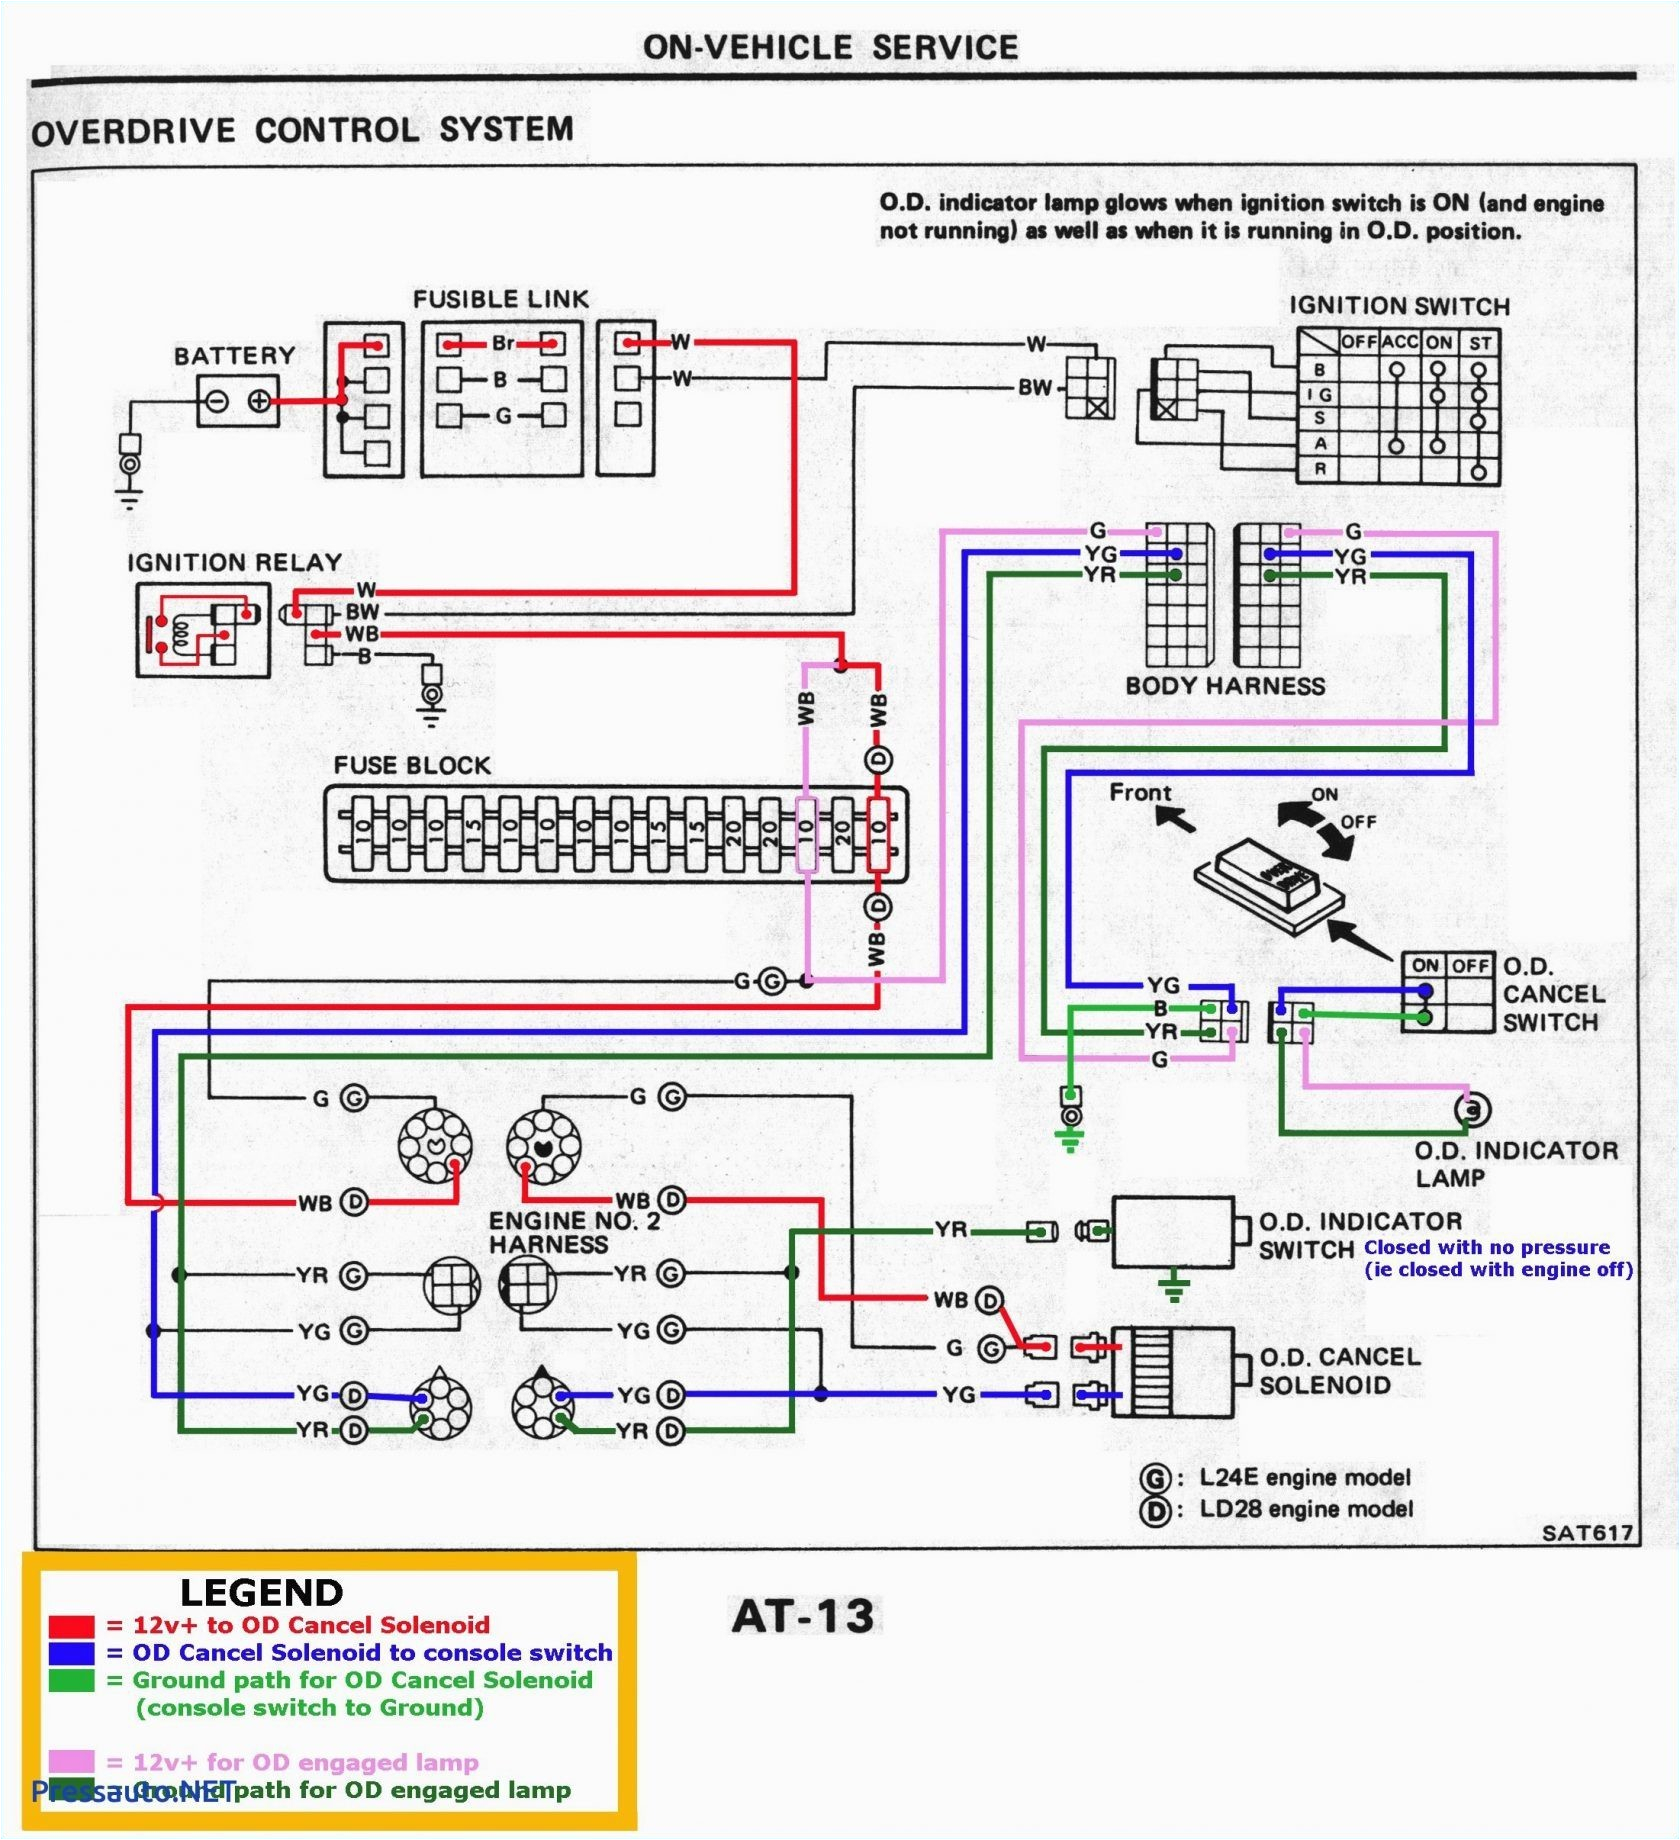 5 9 wiring harness diy manual e book68 chevelle wiring harness manual e book68 chevelle wiring